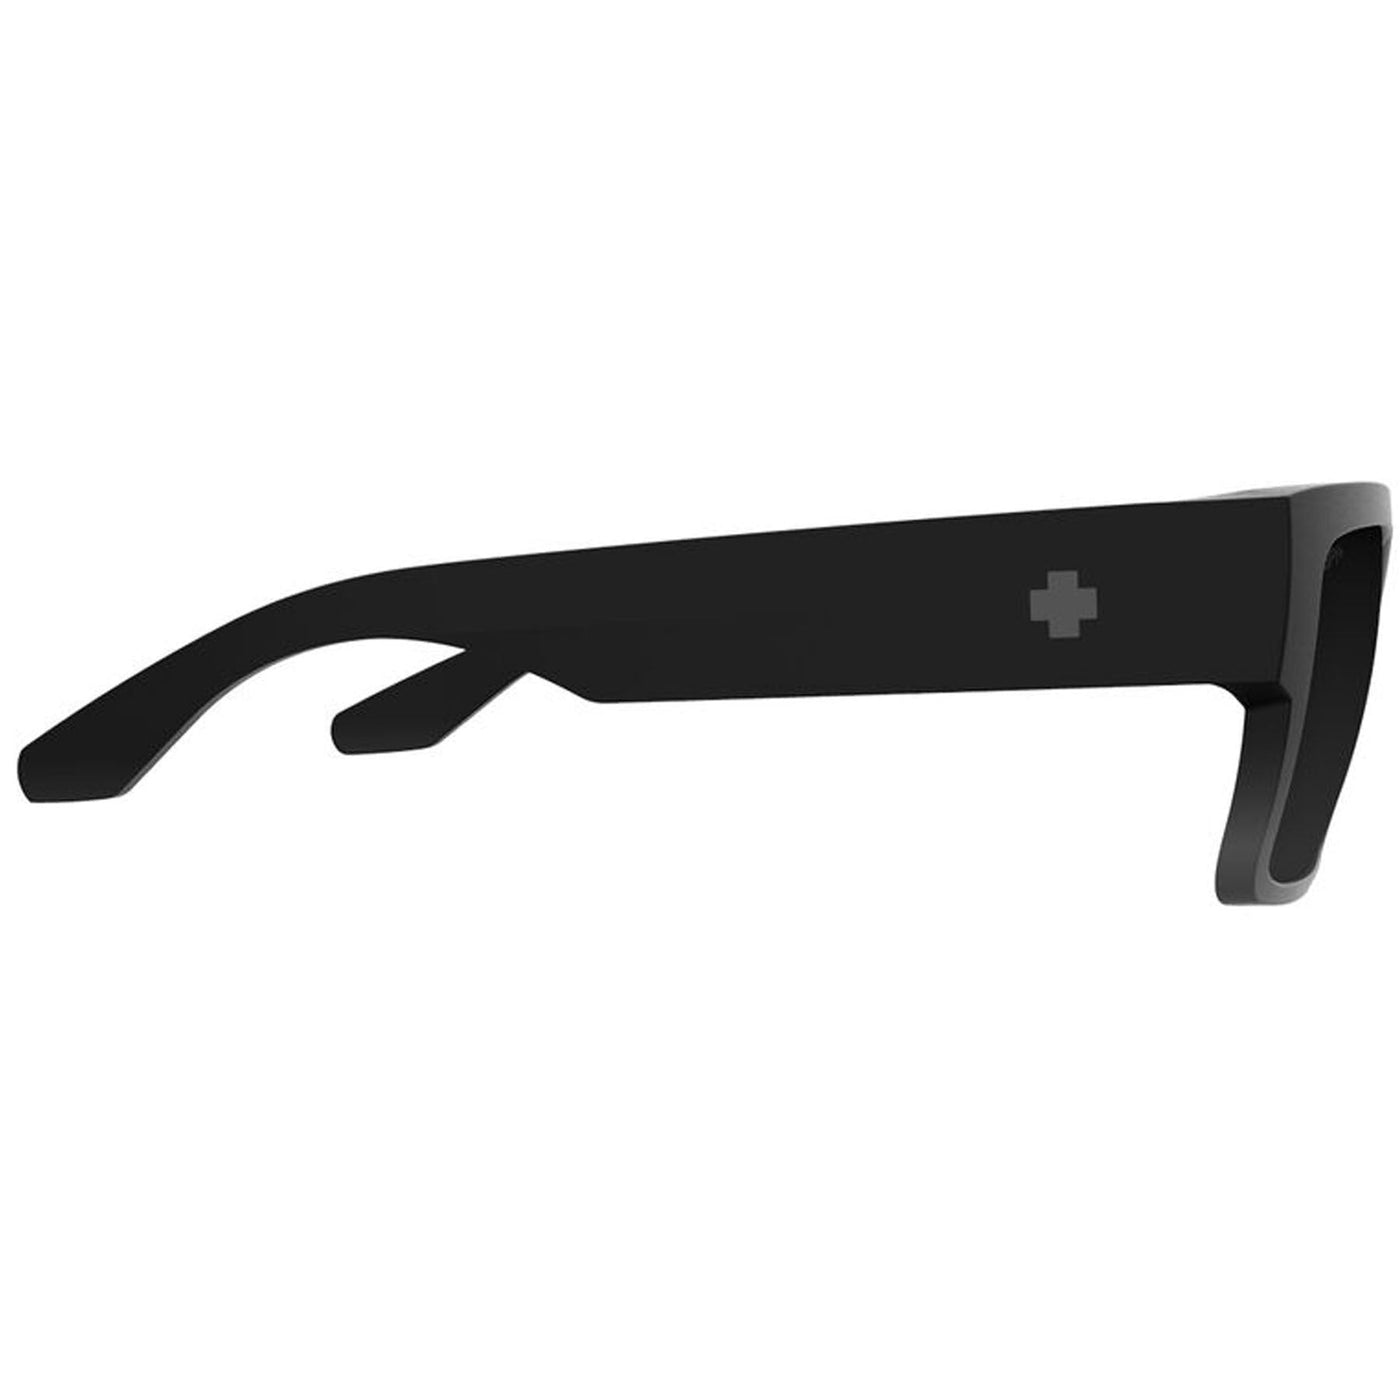 SPY CYRUS Sunglasses, Happy Lens - Soft Matte Black Fade 8Lines Shop - Fast Shipping